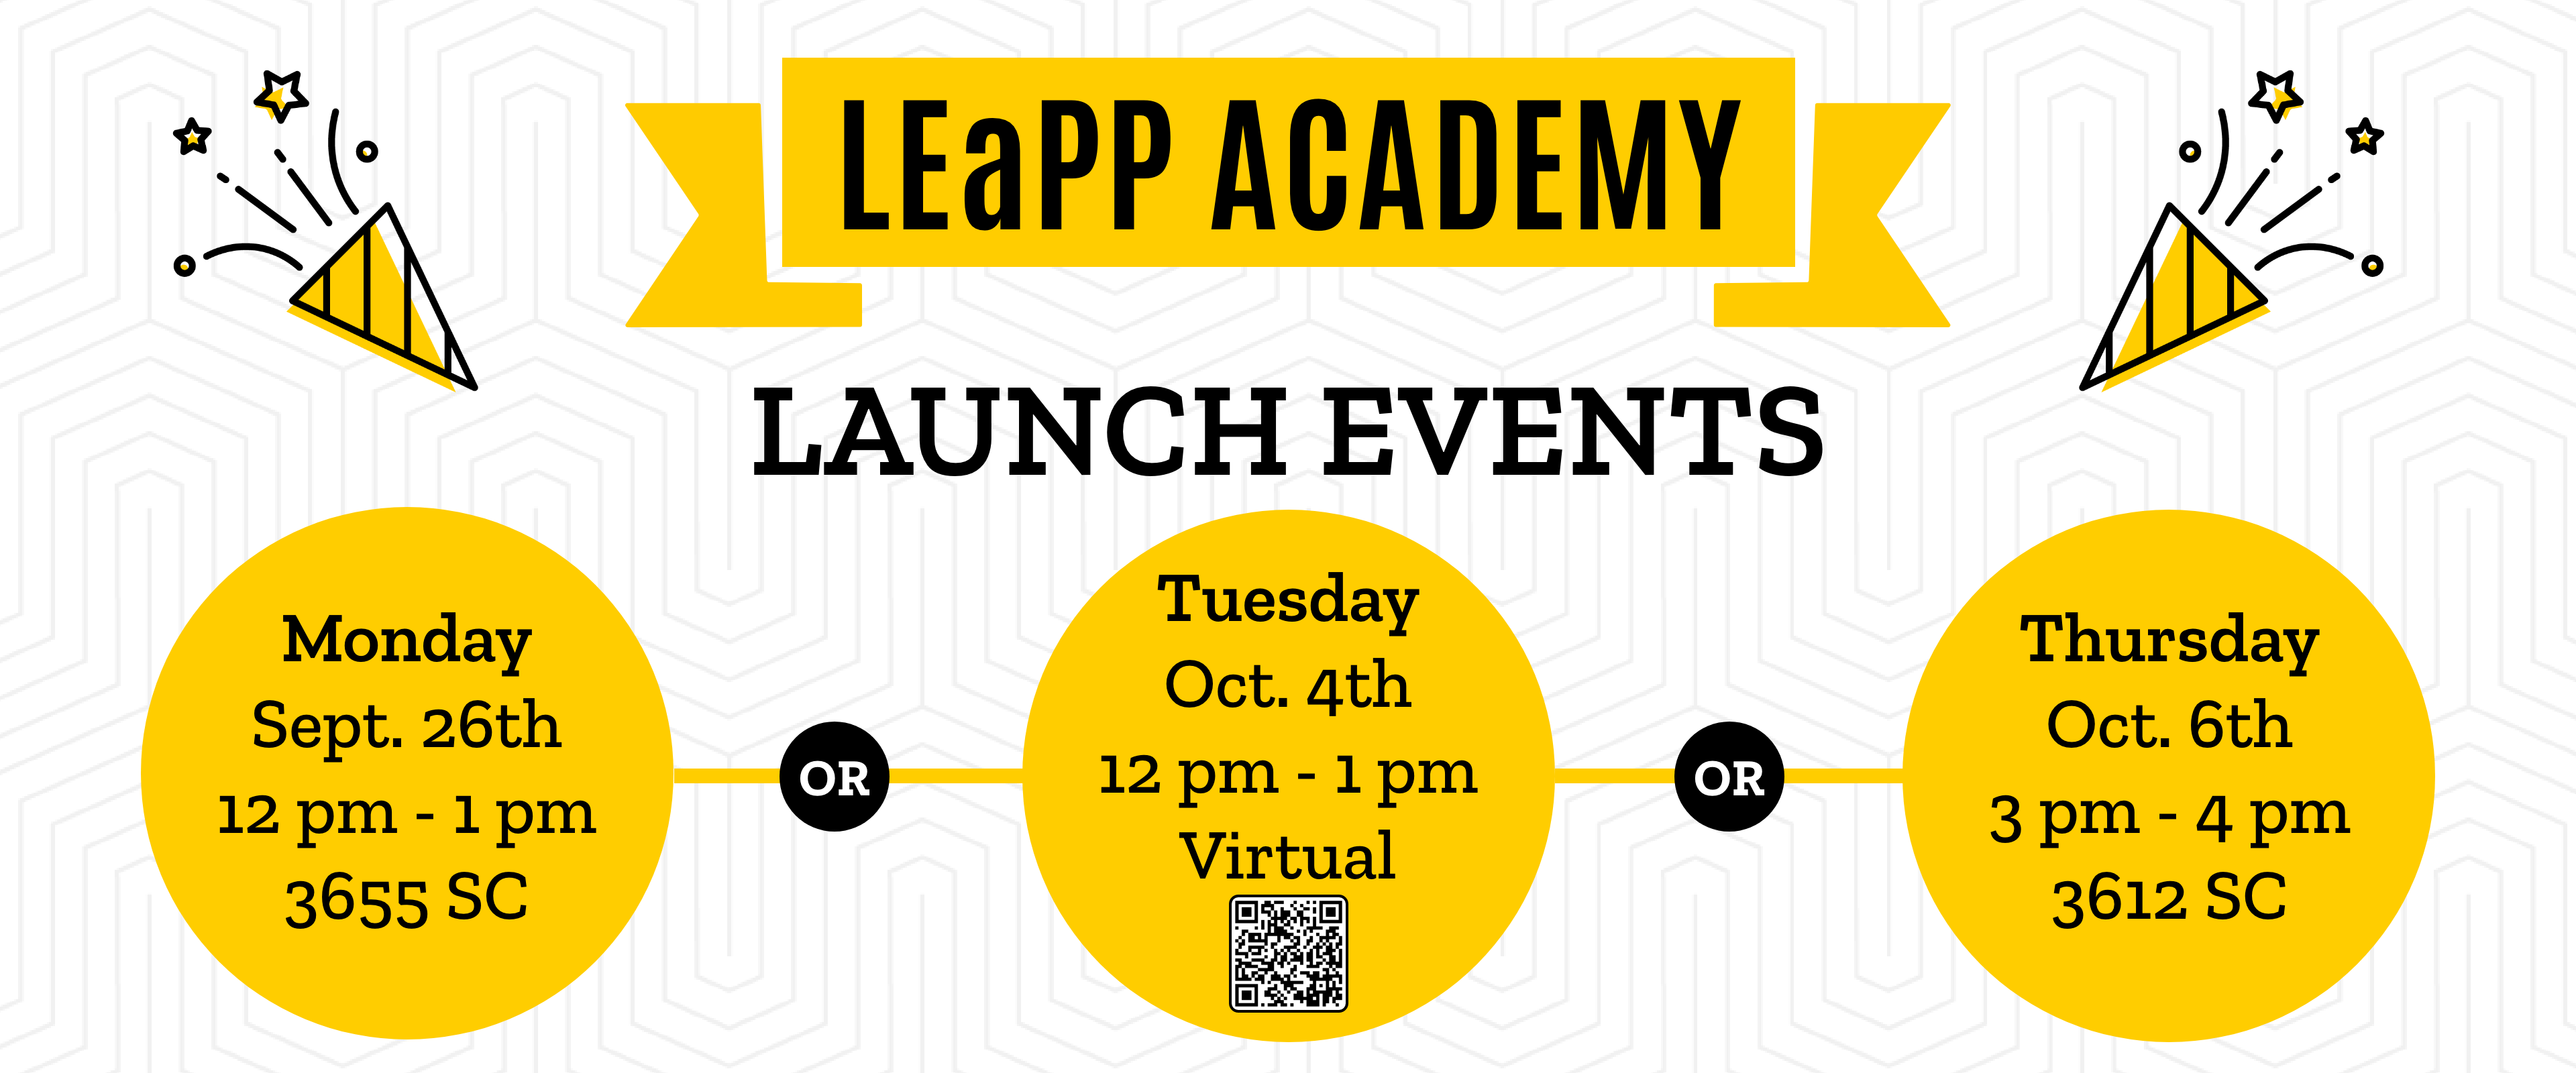 LEaPP Academy Launch Dates